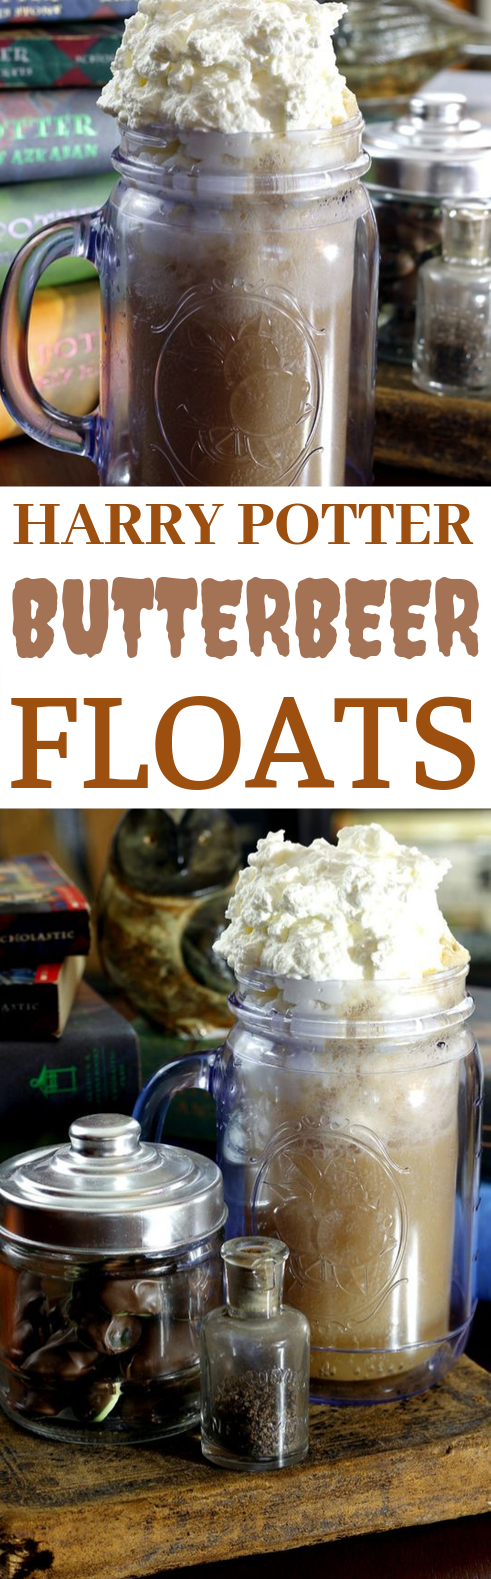 Homemade Butterbeer Floats #drinks #kidfriendly